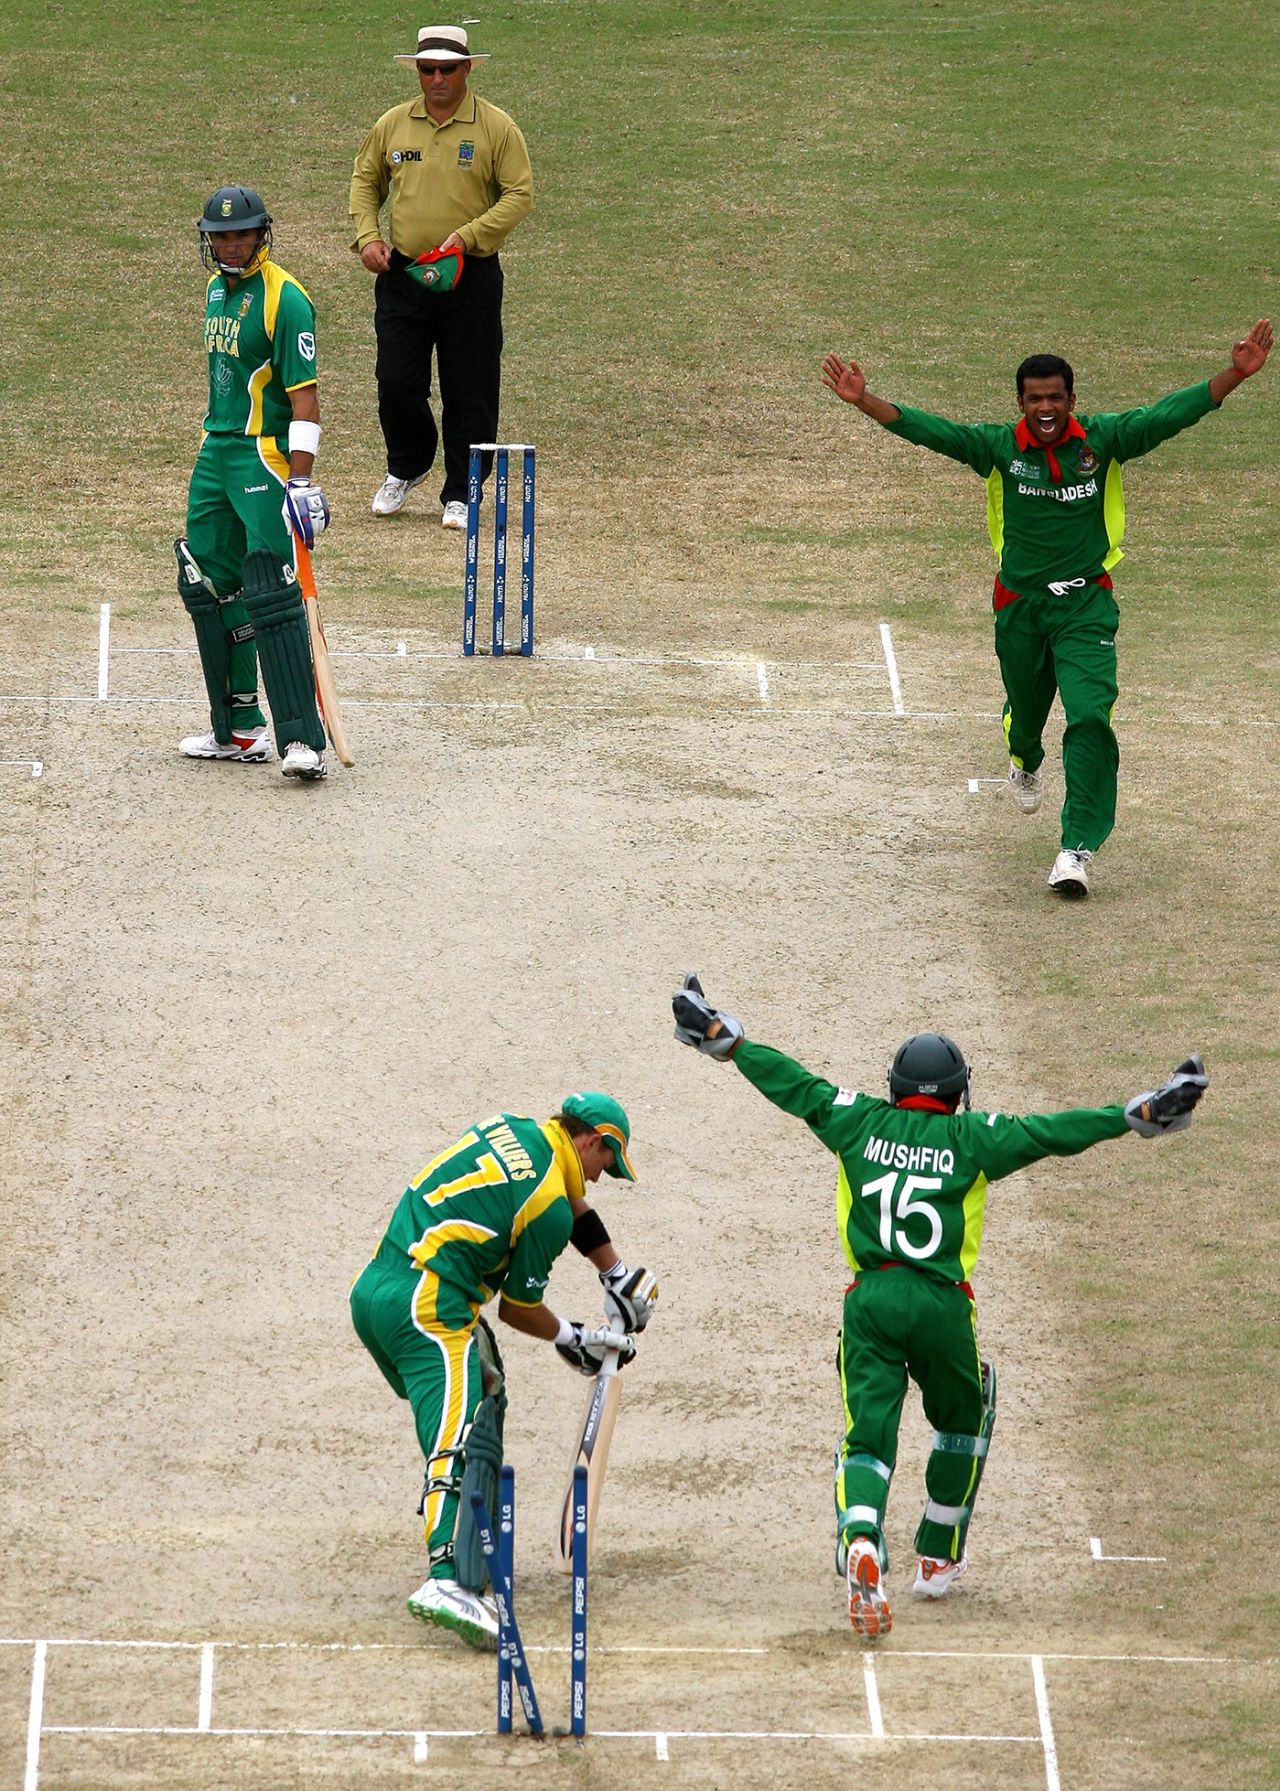 Abdur Razzak celebrates dismissing AB de Villiers, Bangladesh vs South Africa, Super Eights, Guyana, April 7, 2007